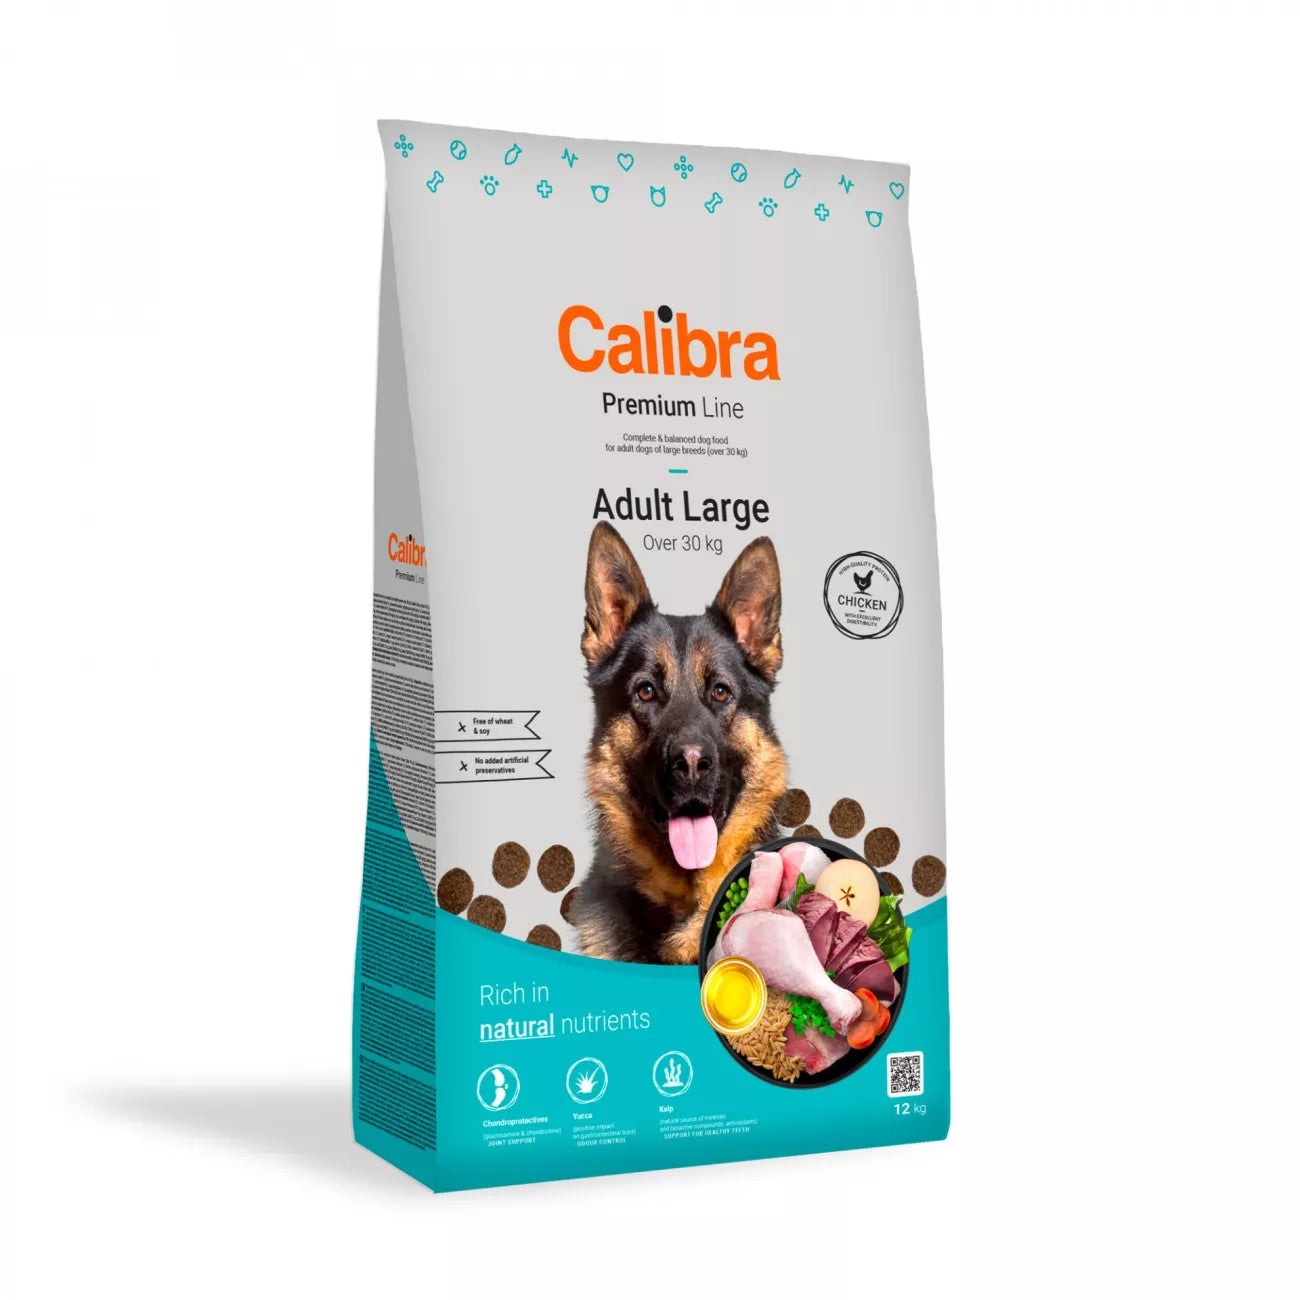 Calibra Dog Premium Line Adult Large - 12Kg